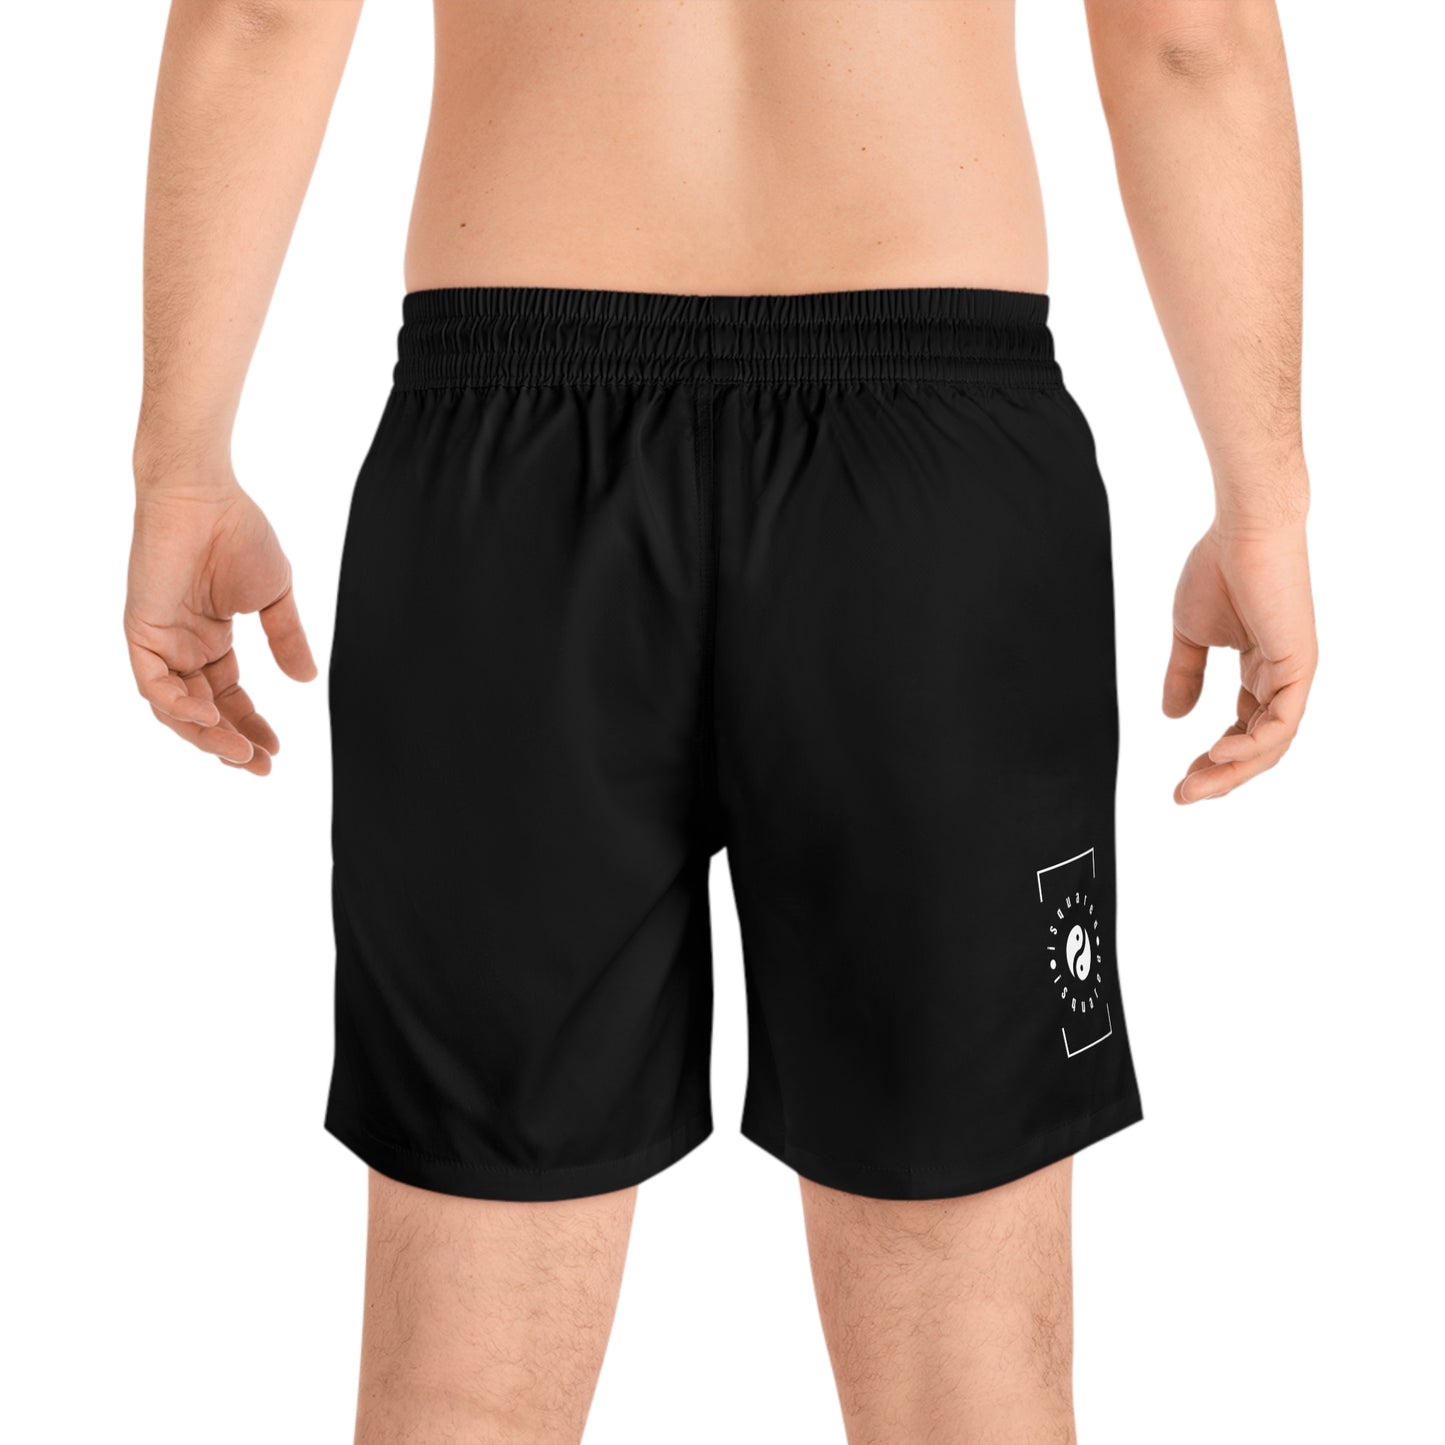 Pure Black - Swim Shorts (Solid Color) for Men